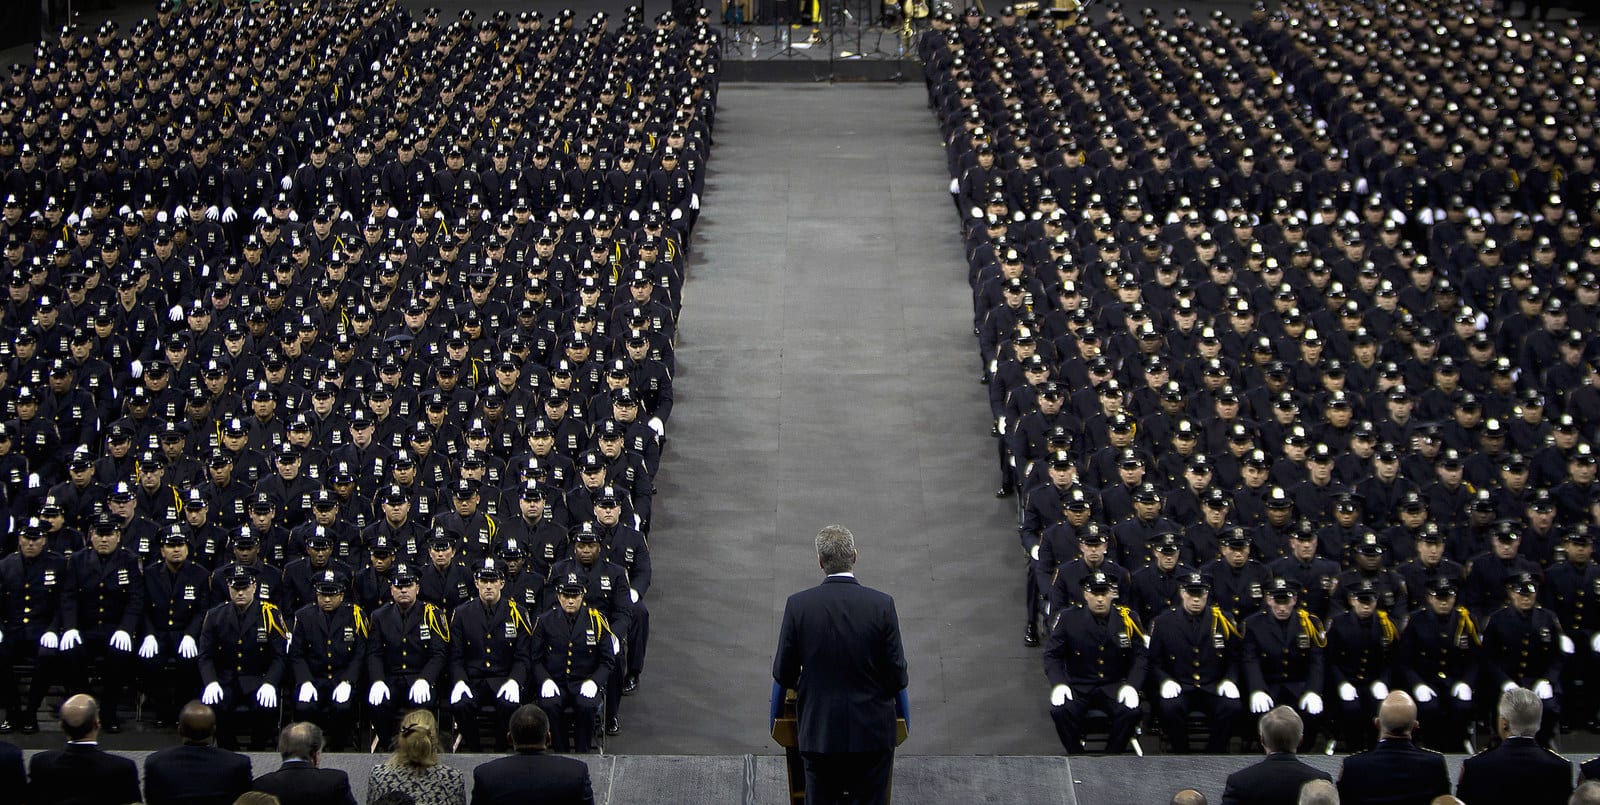 Mayor Bill de Blasio speaks to the New York City Police Academy graduating class, Dec. 29, 2014. - Carlo Allegri / Reuters